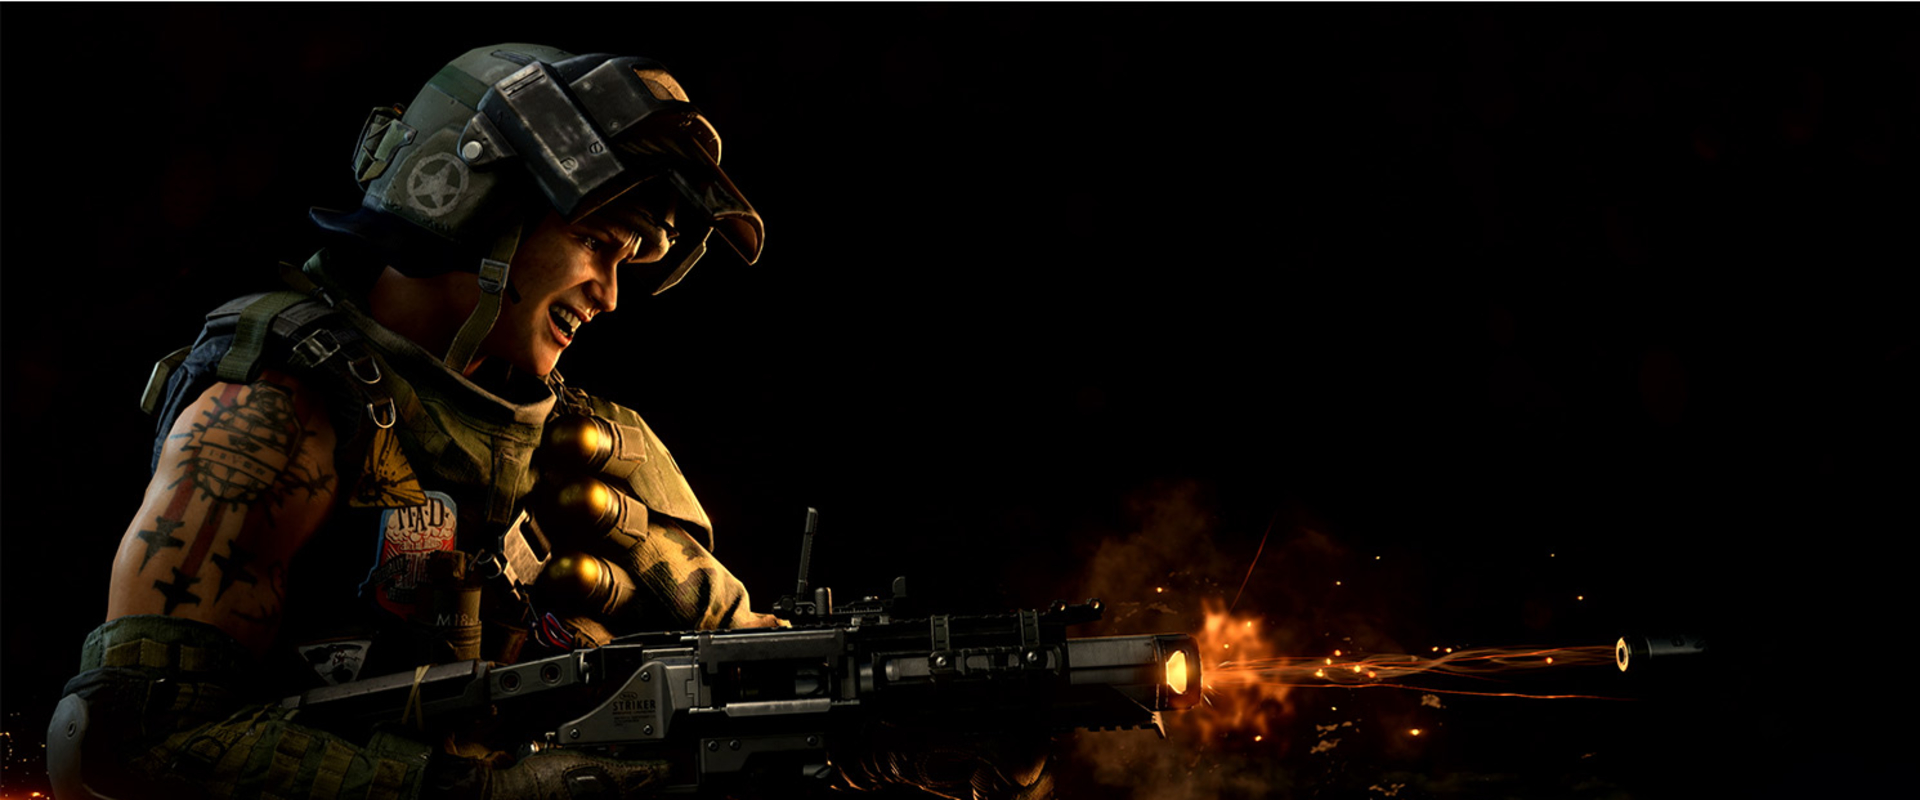 A Call of Duty: Black Ops 4 valamiben lenyomhatja a Fortnite-ot